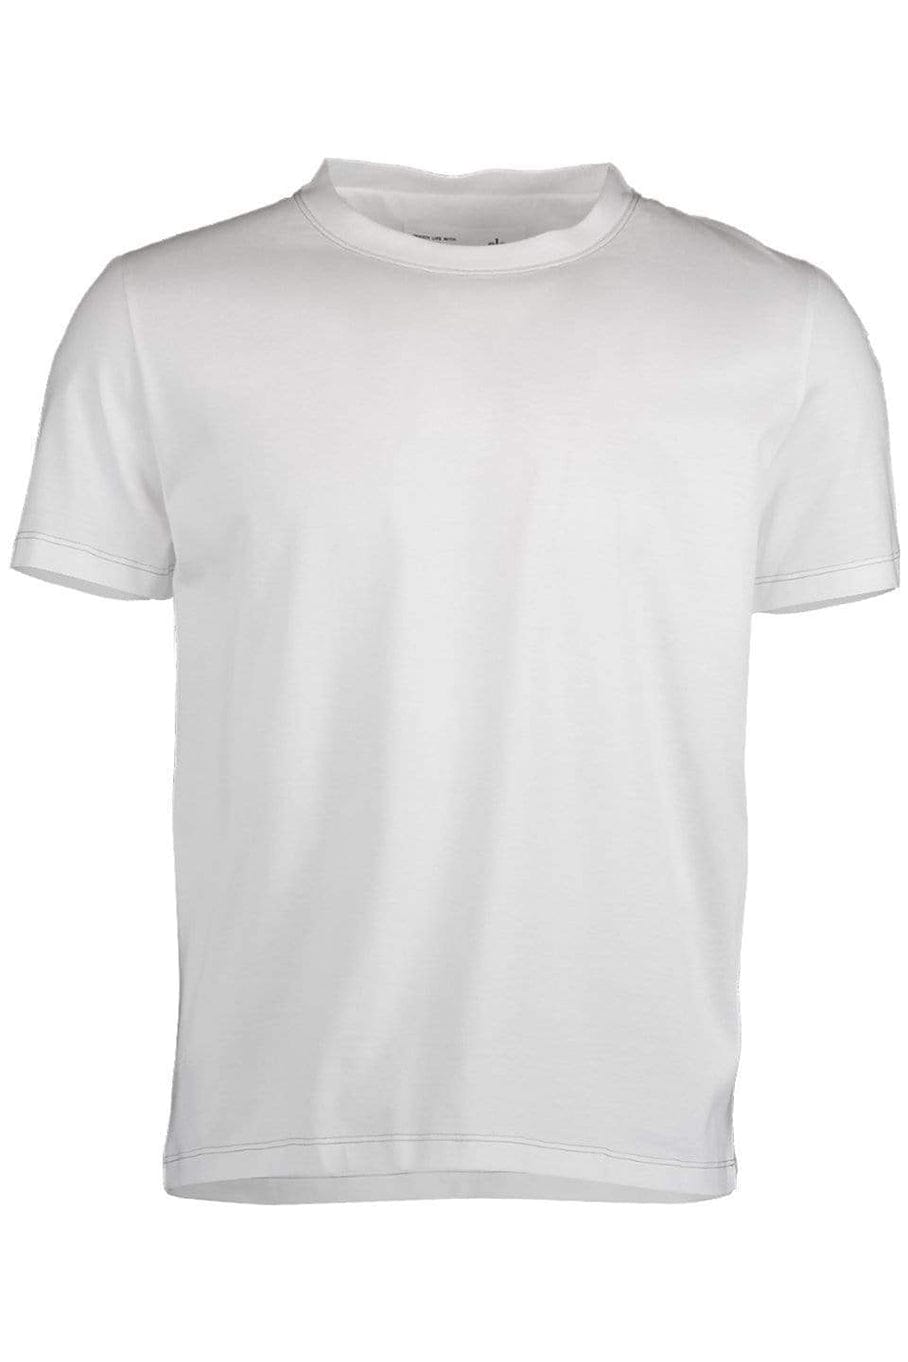 Eleventy \ Clothing \ T-Shirts